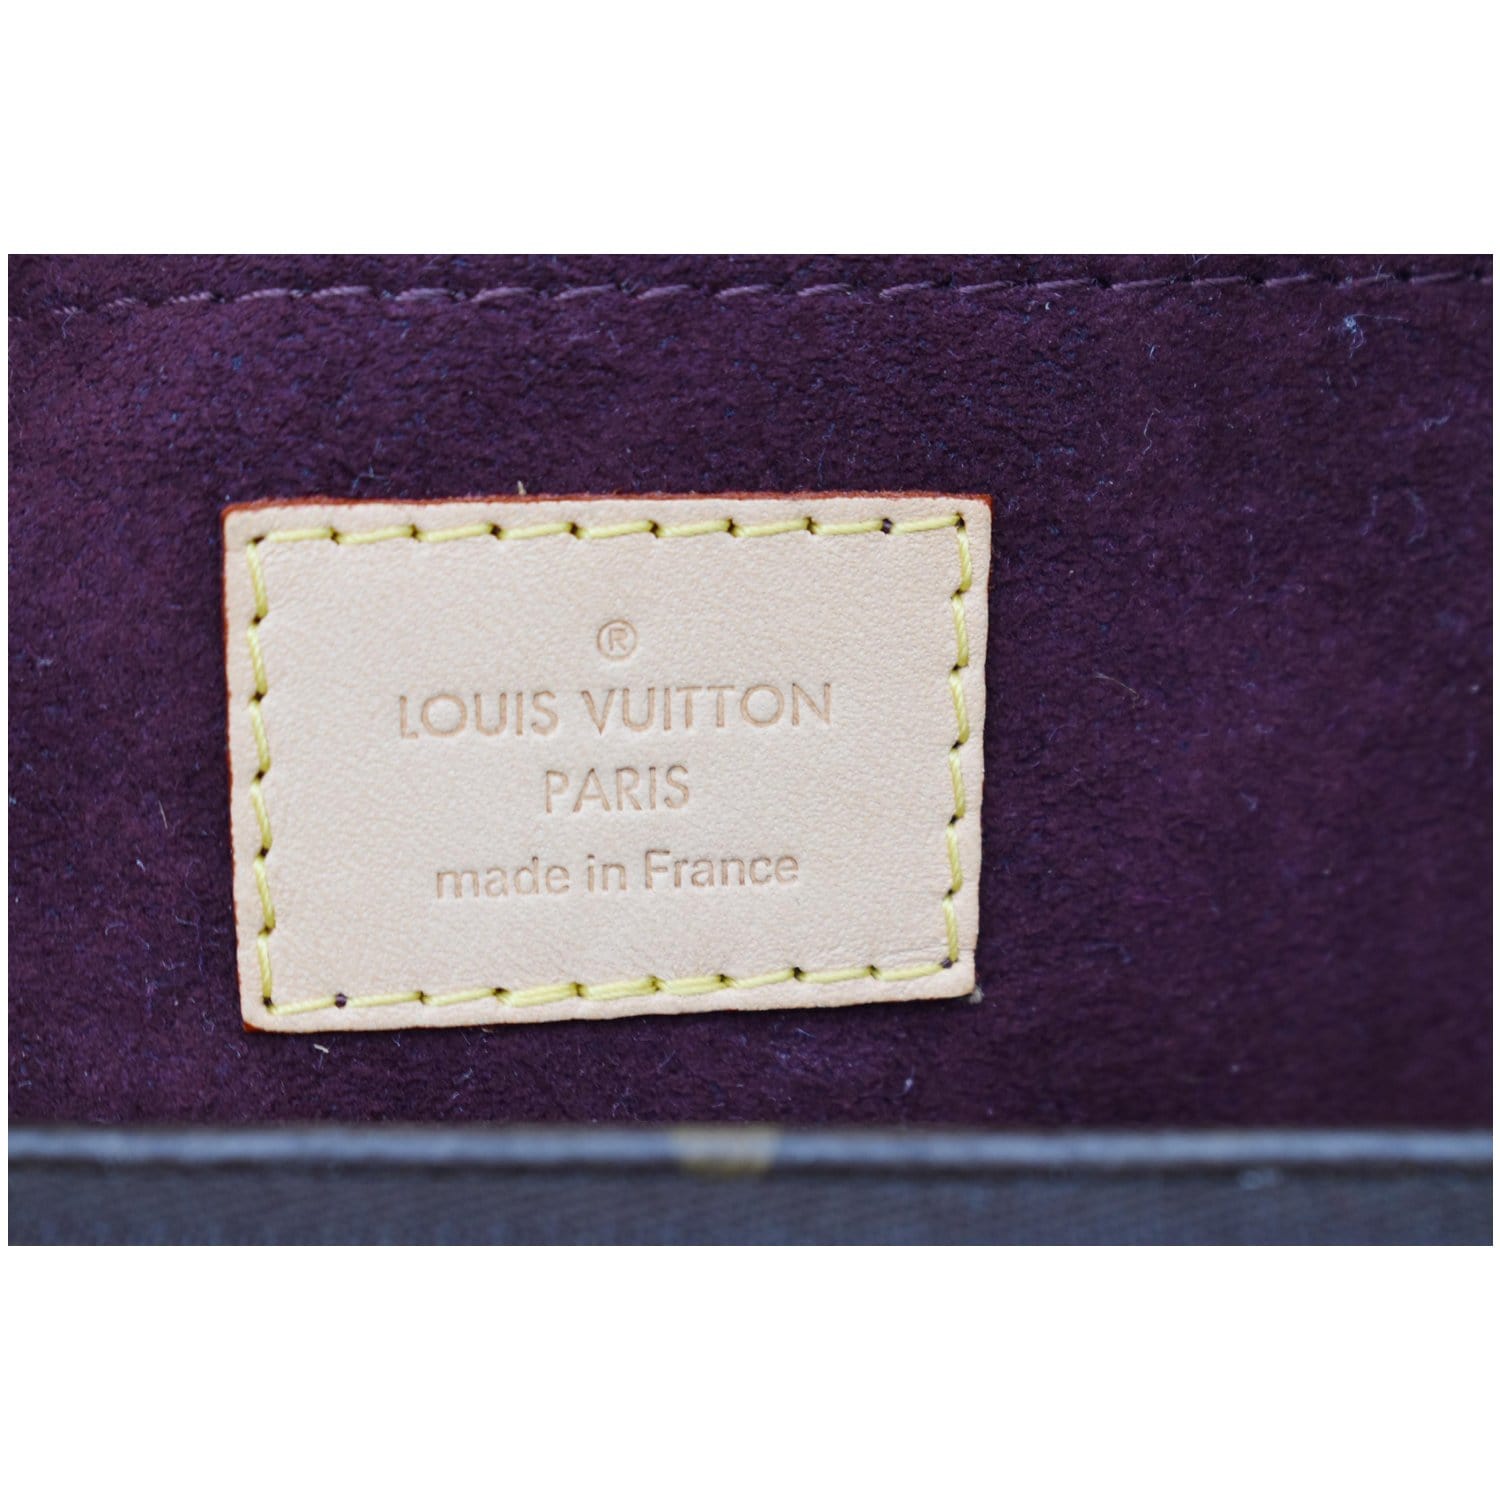 Louis Vuitton Parigi Montaigne negozio - Francia